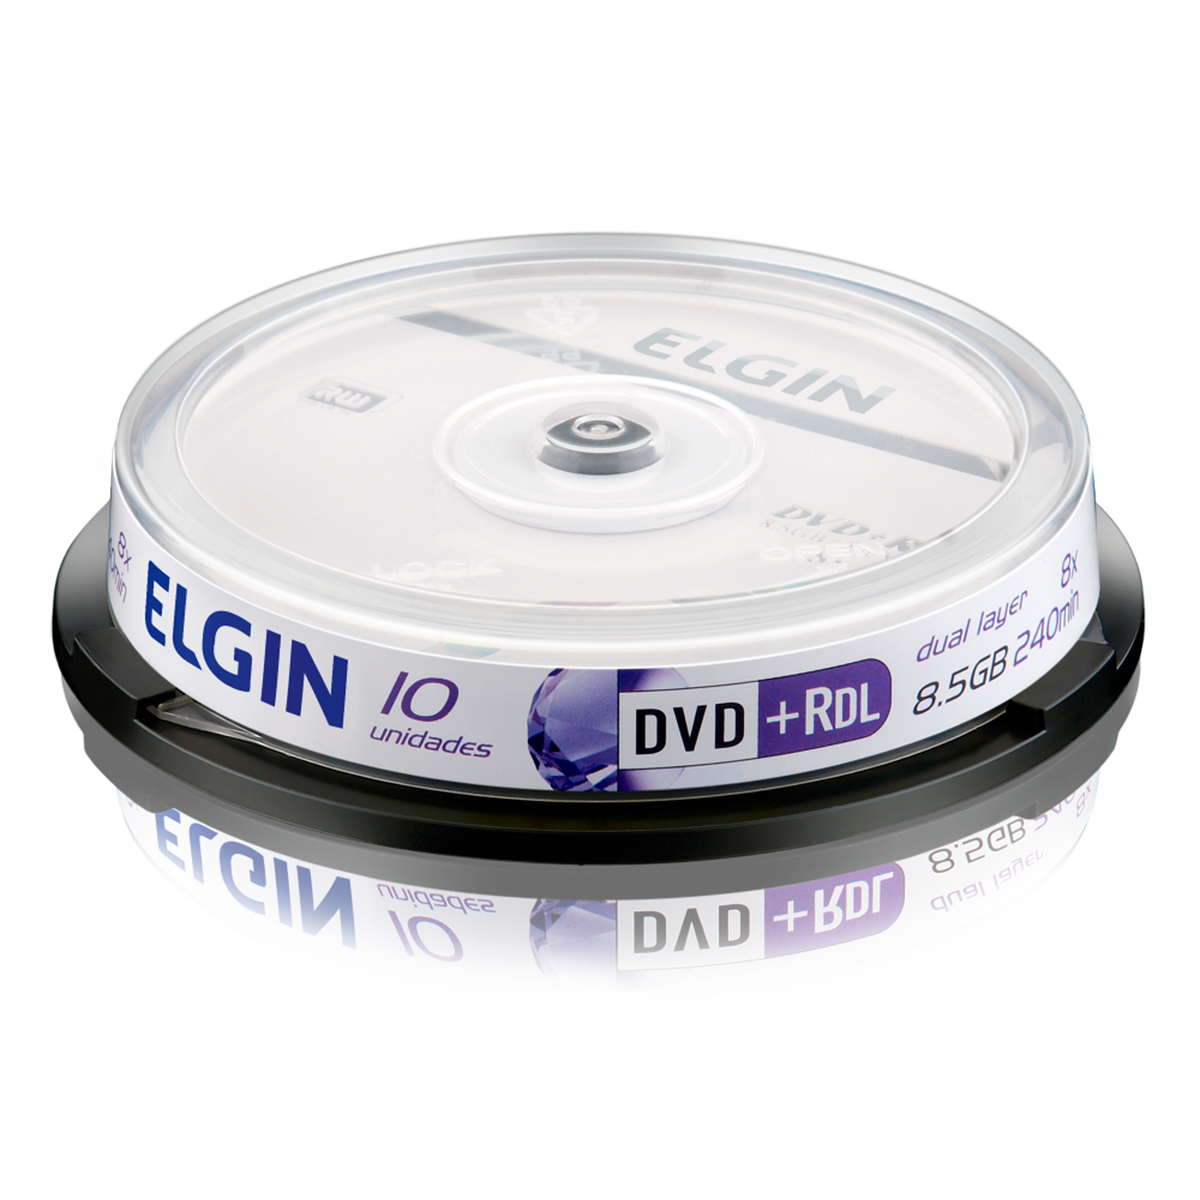 DVD+R DL 8.5GB 8x - Dual Layer - com 10 unidades - Elgin 82083